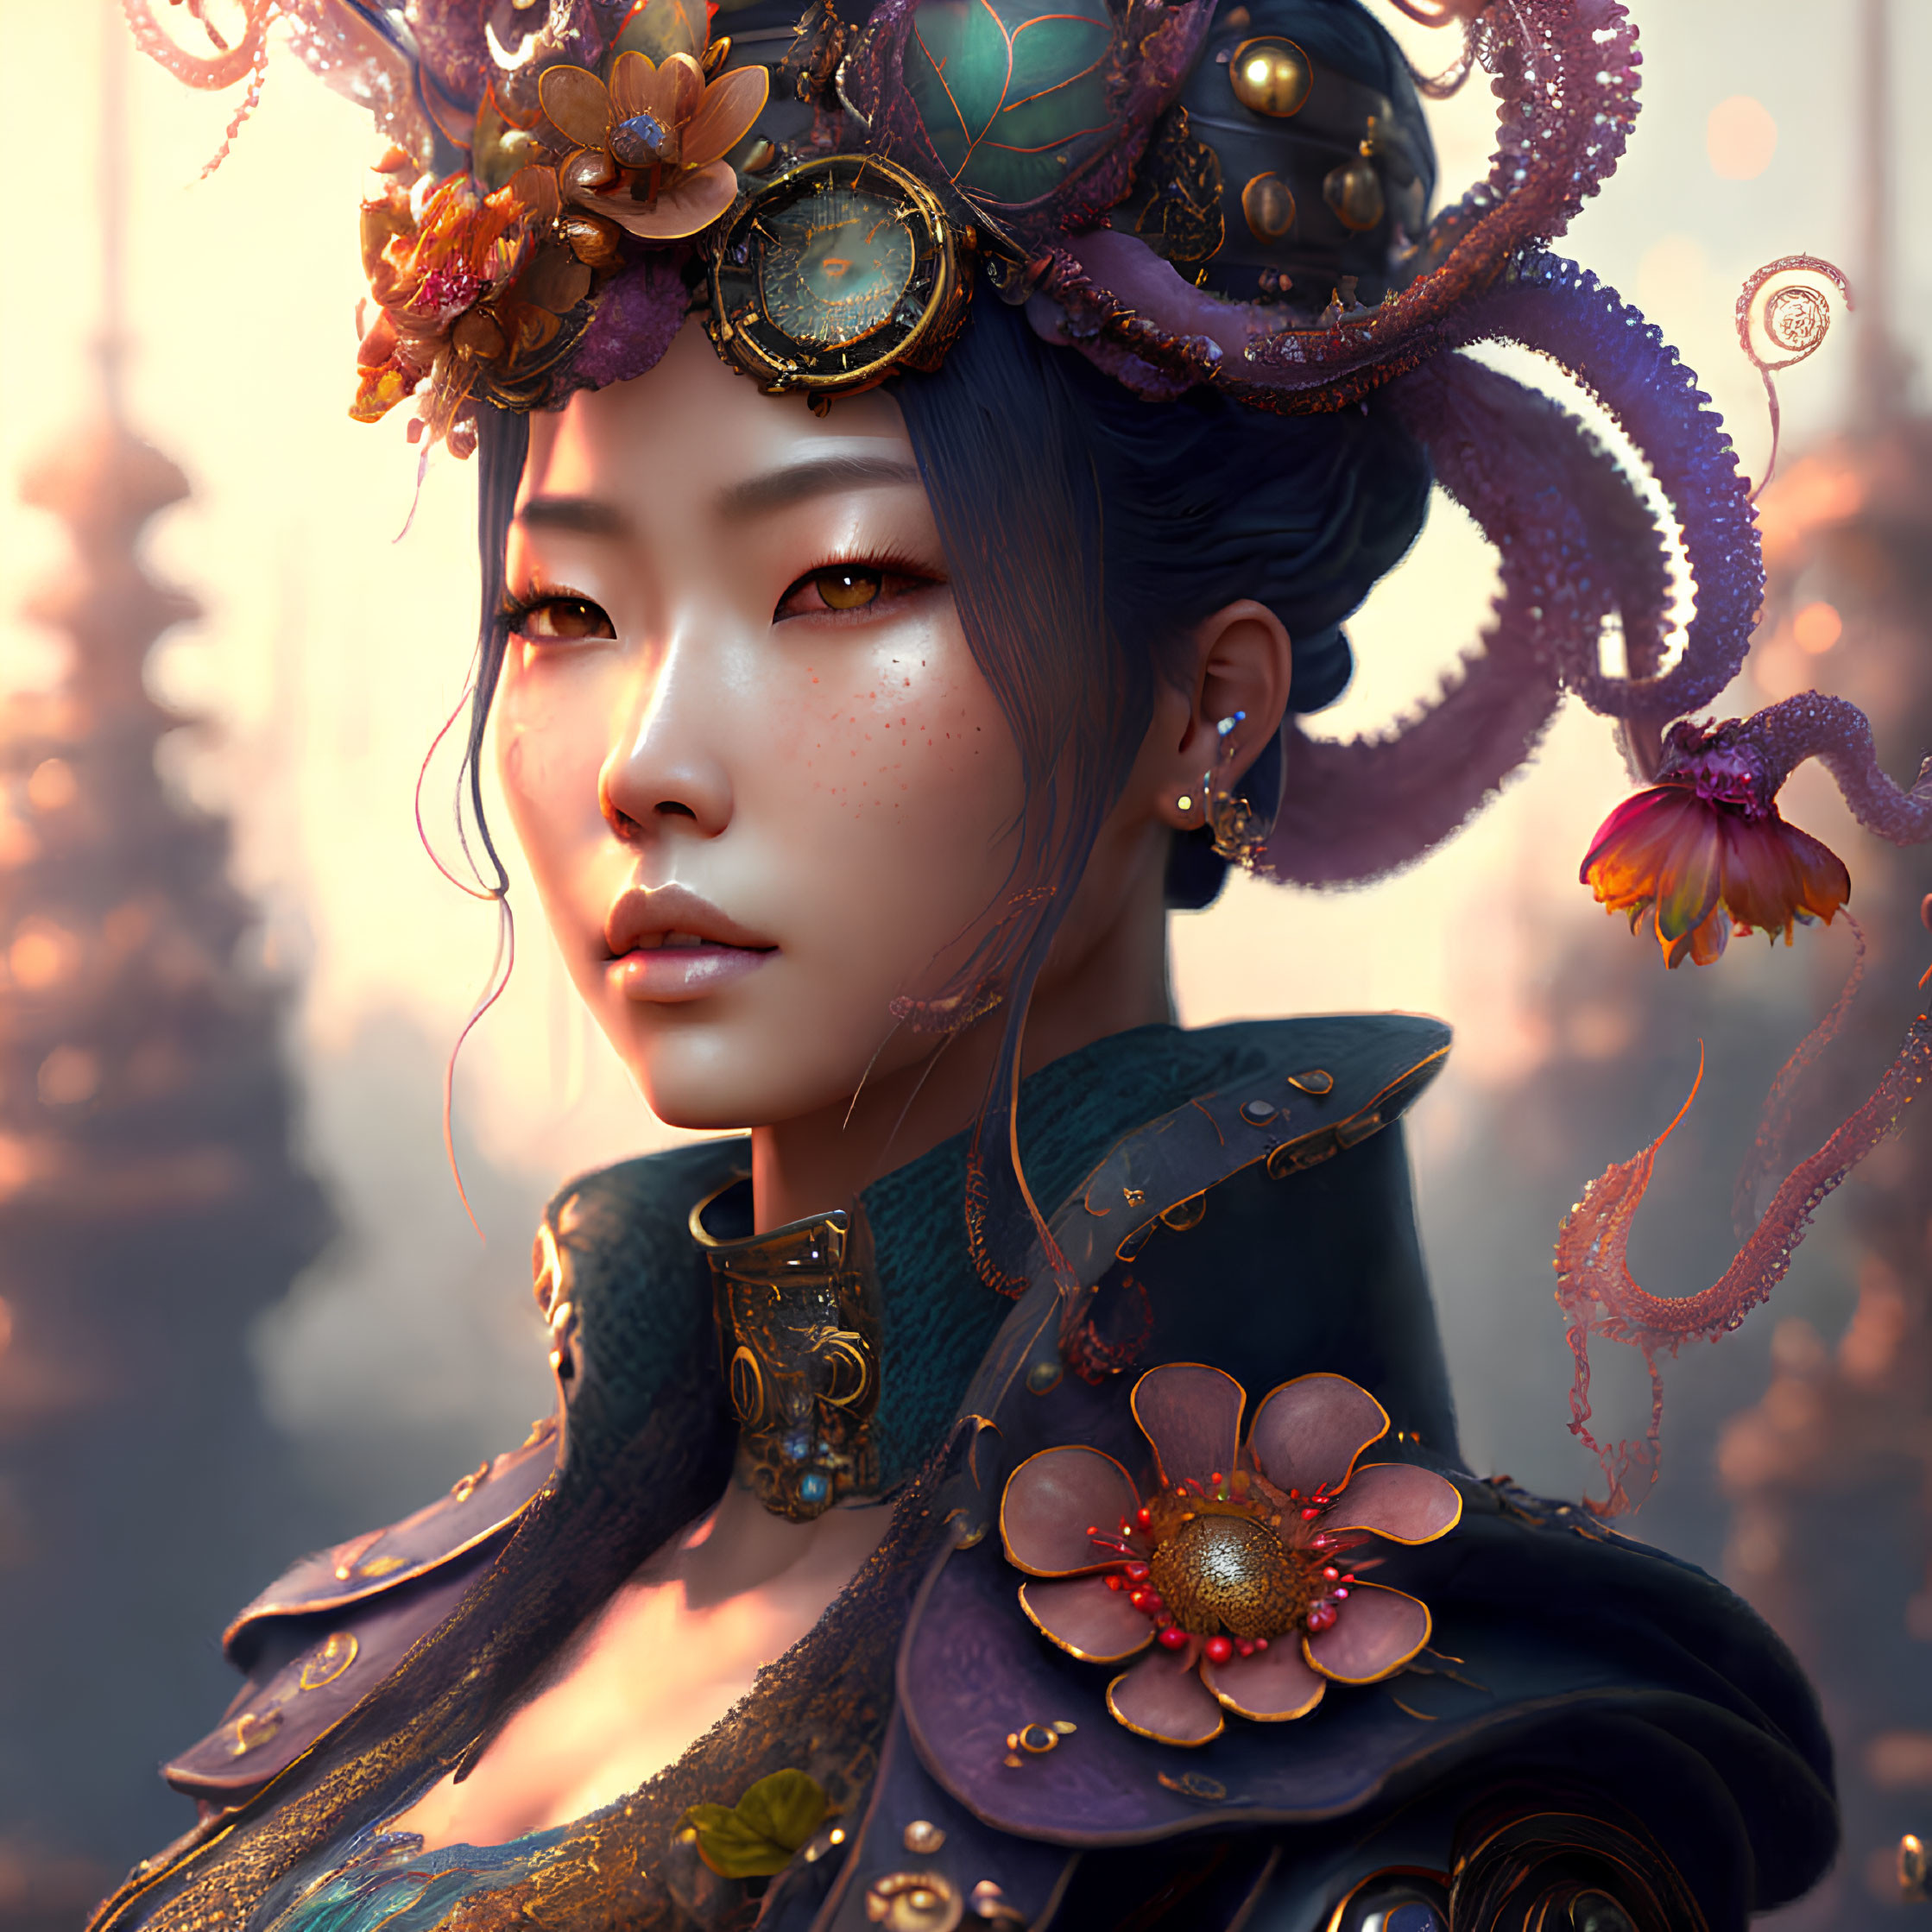 Digital artwork: Woman with steampunk headpiece & flowers on blurred background